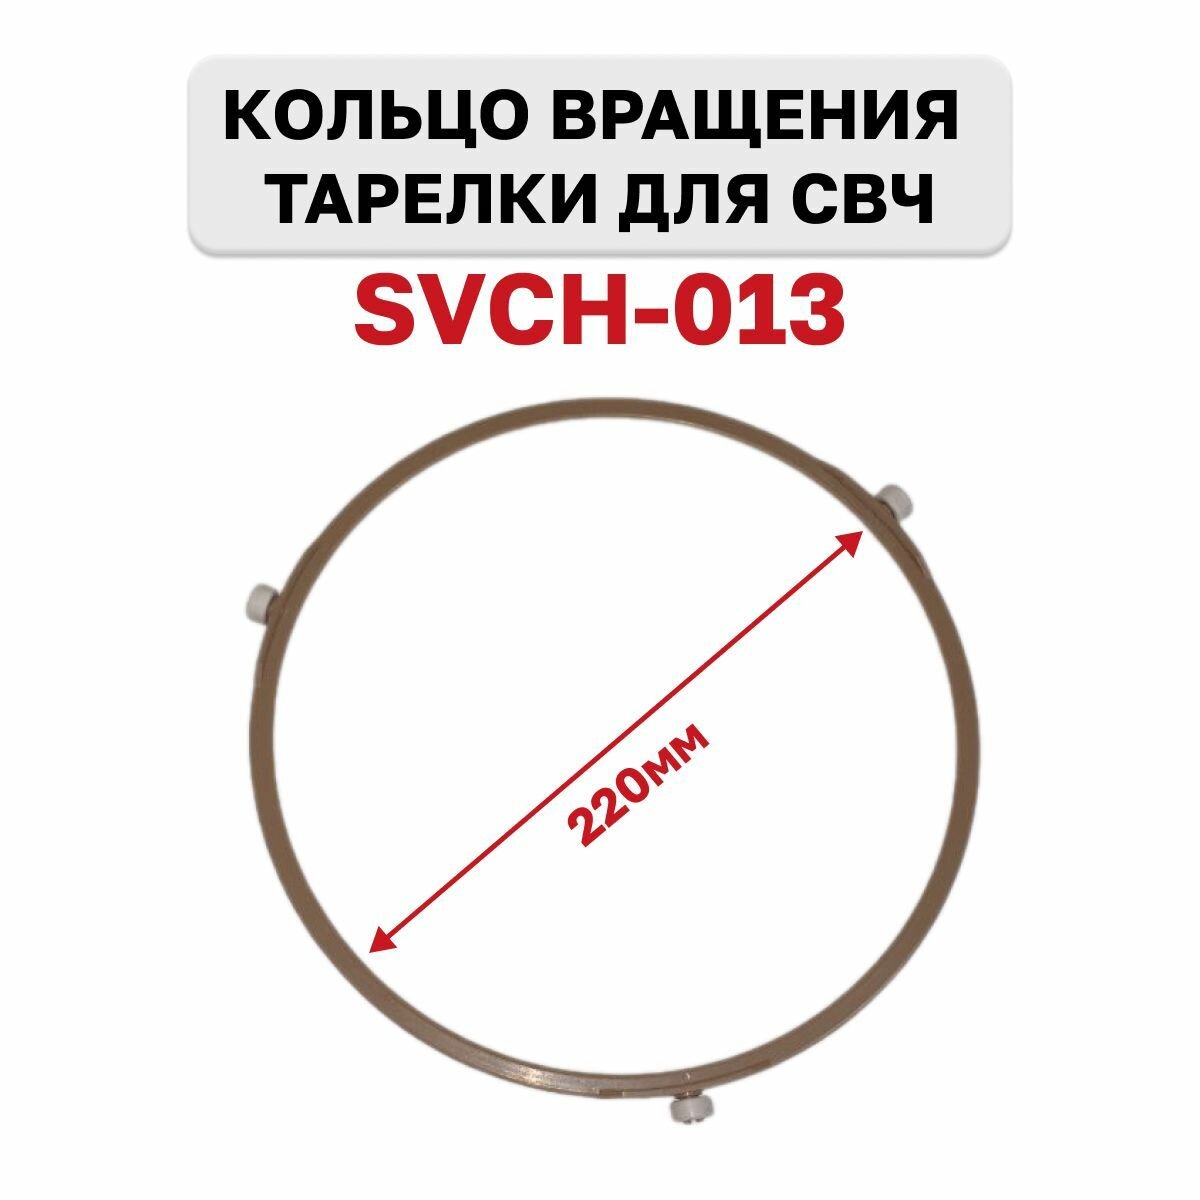 Кольцо вращения тарелки микроволновой печи СВЧ , диаметр 22см (220мм), SVCH-013